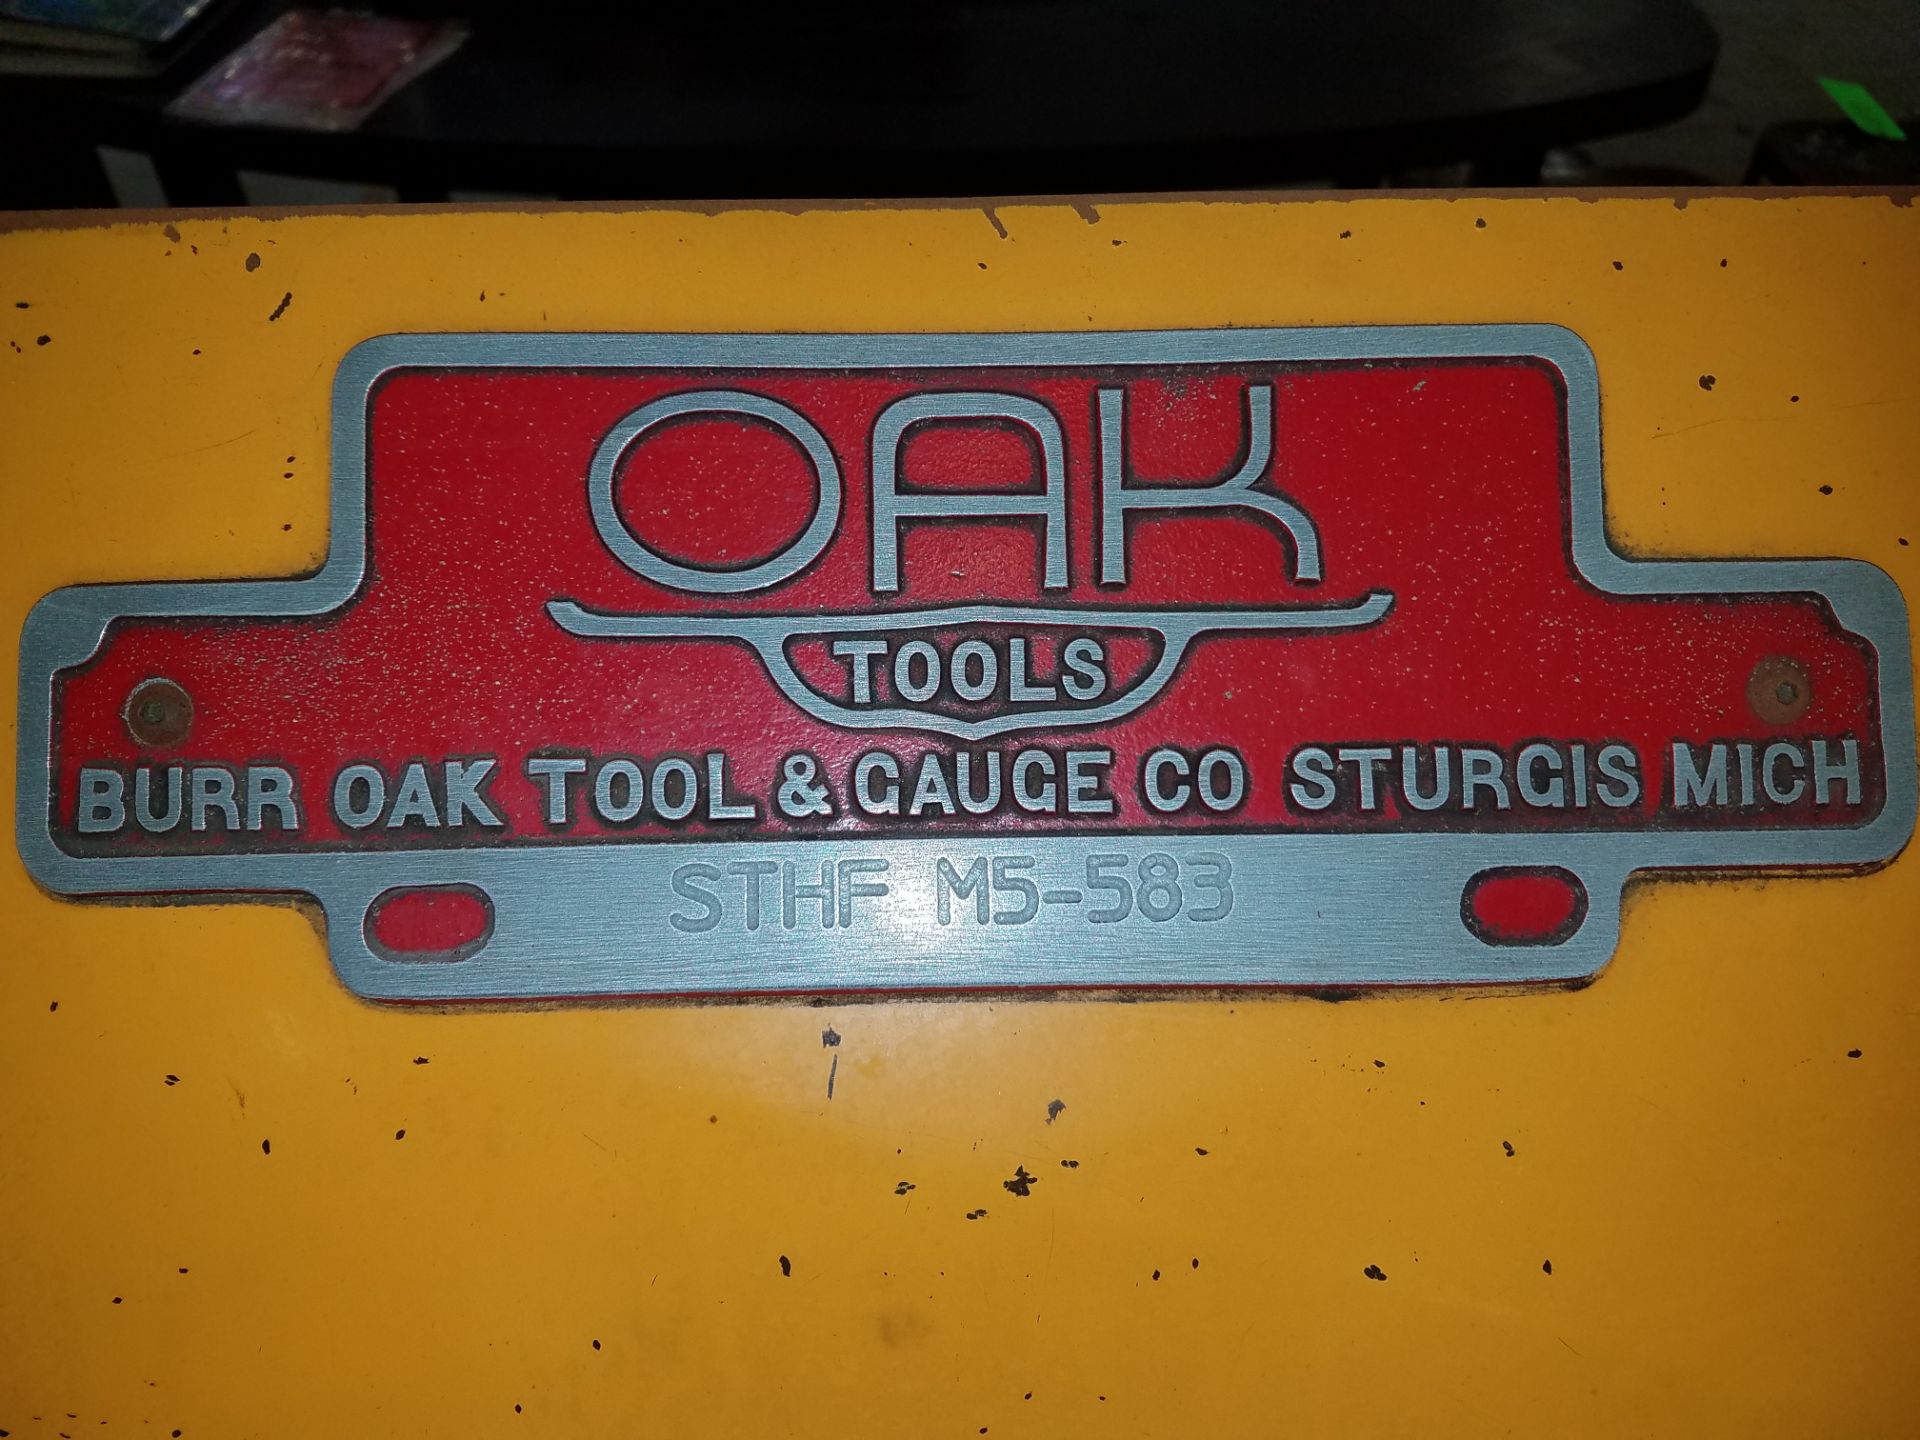 OAK TOOLS MODEL STHF M5-583; TUBE CUTTER W/ OAK TOOLS & MITUTOYO CONTROLS - Image 4 of 4